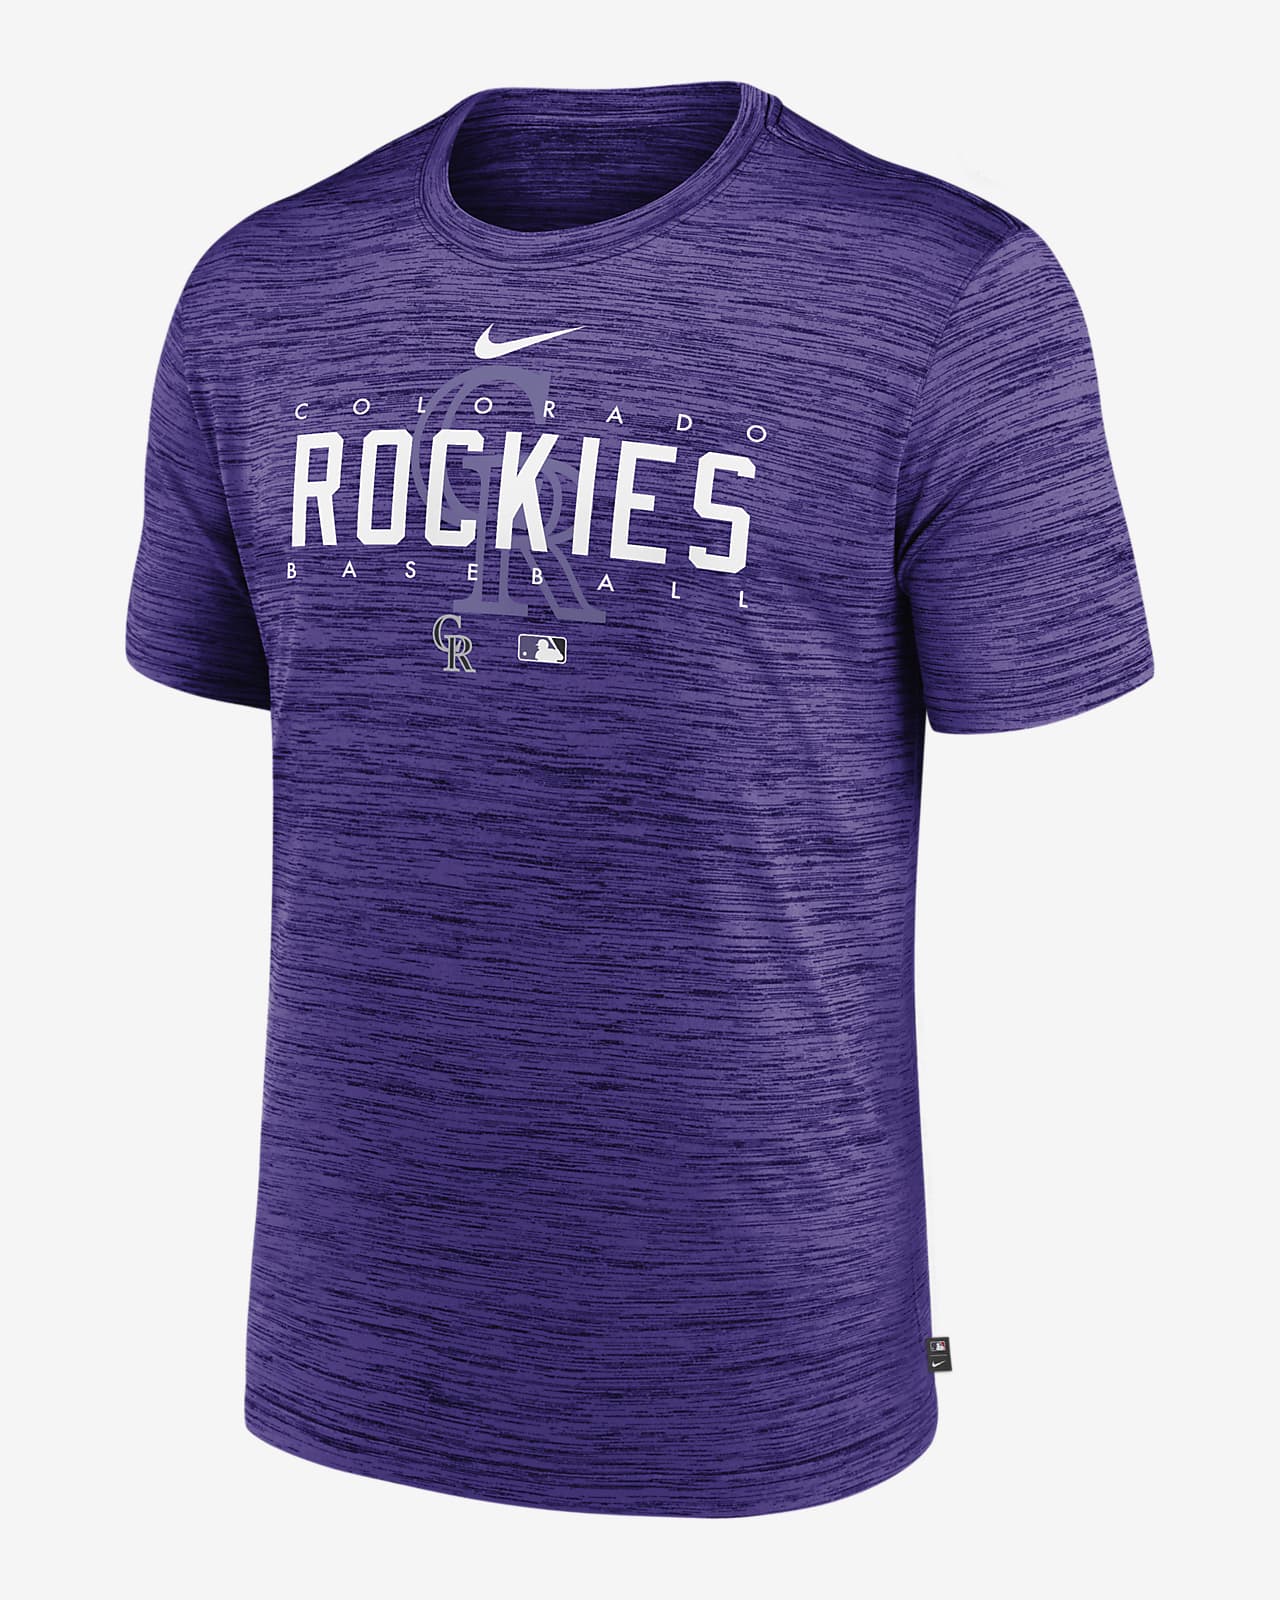 Nike Dri-FIT Velocity Practice (MLB Colorado Rockies) Men's T-Shirt